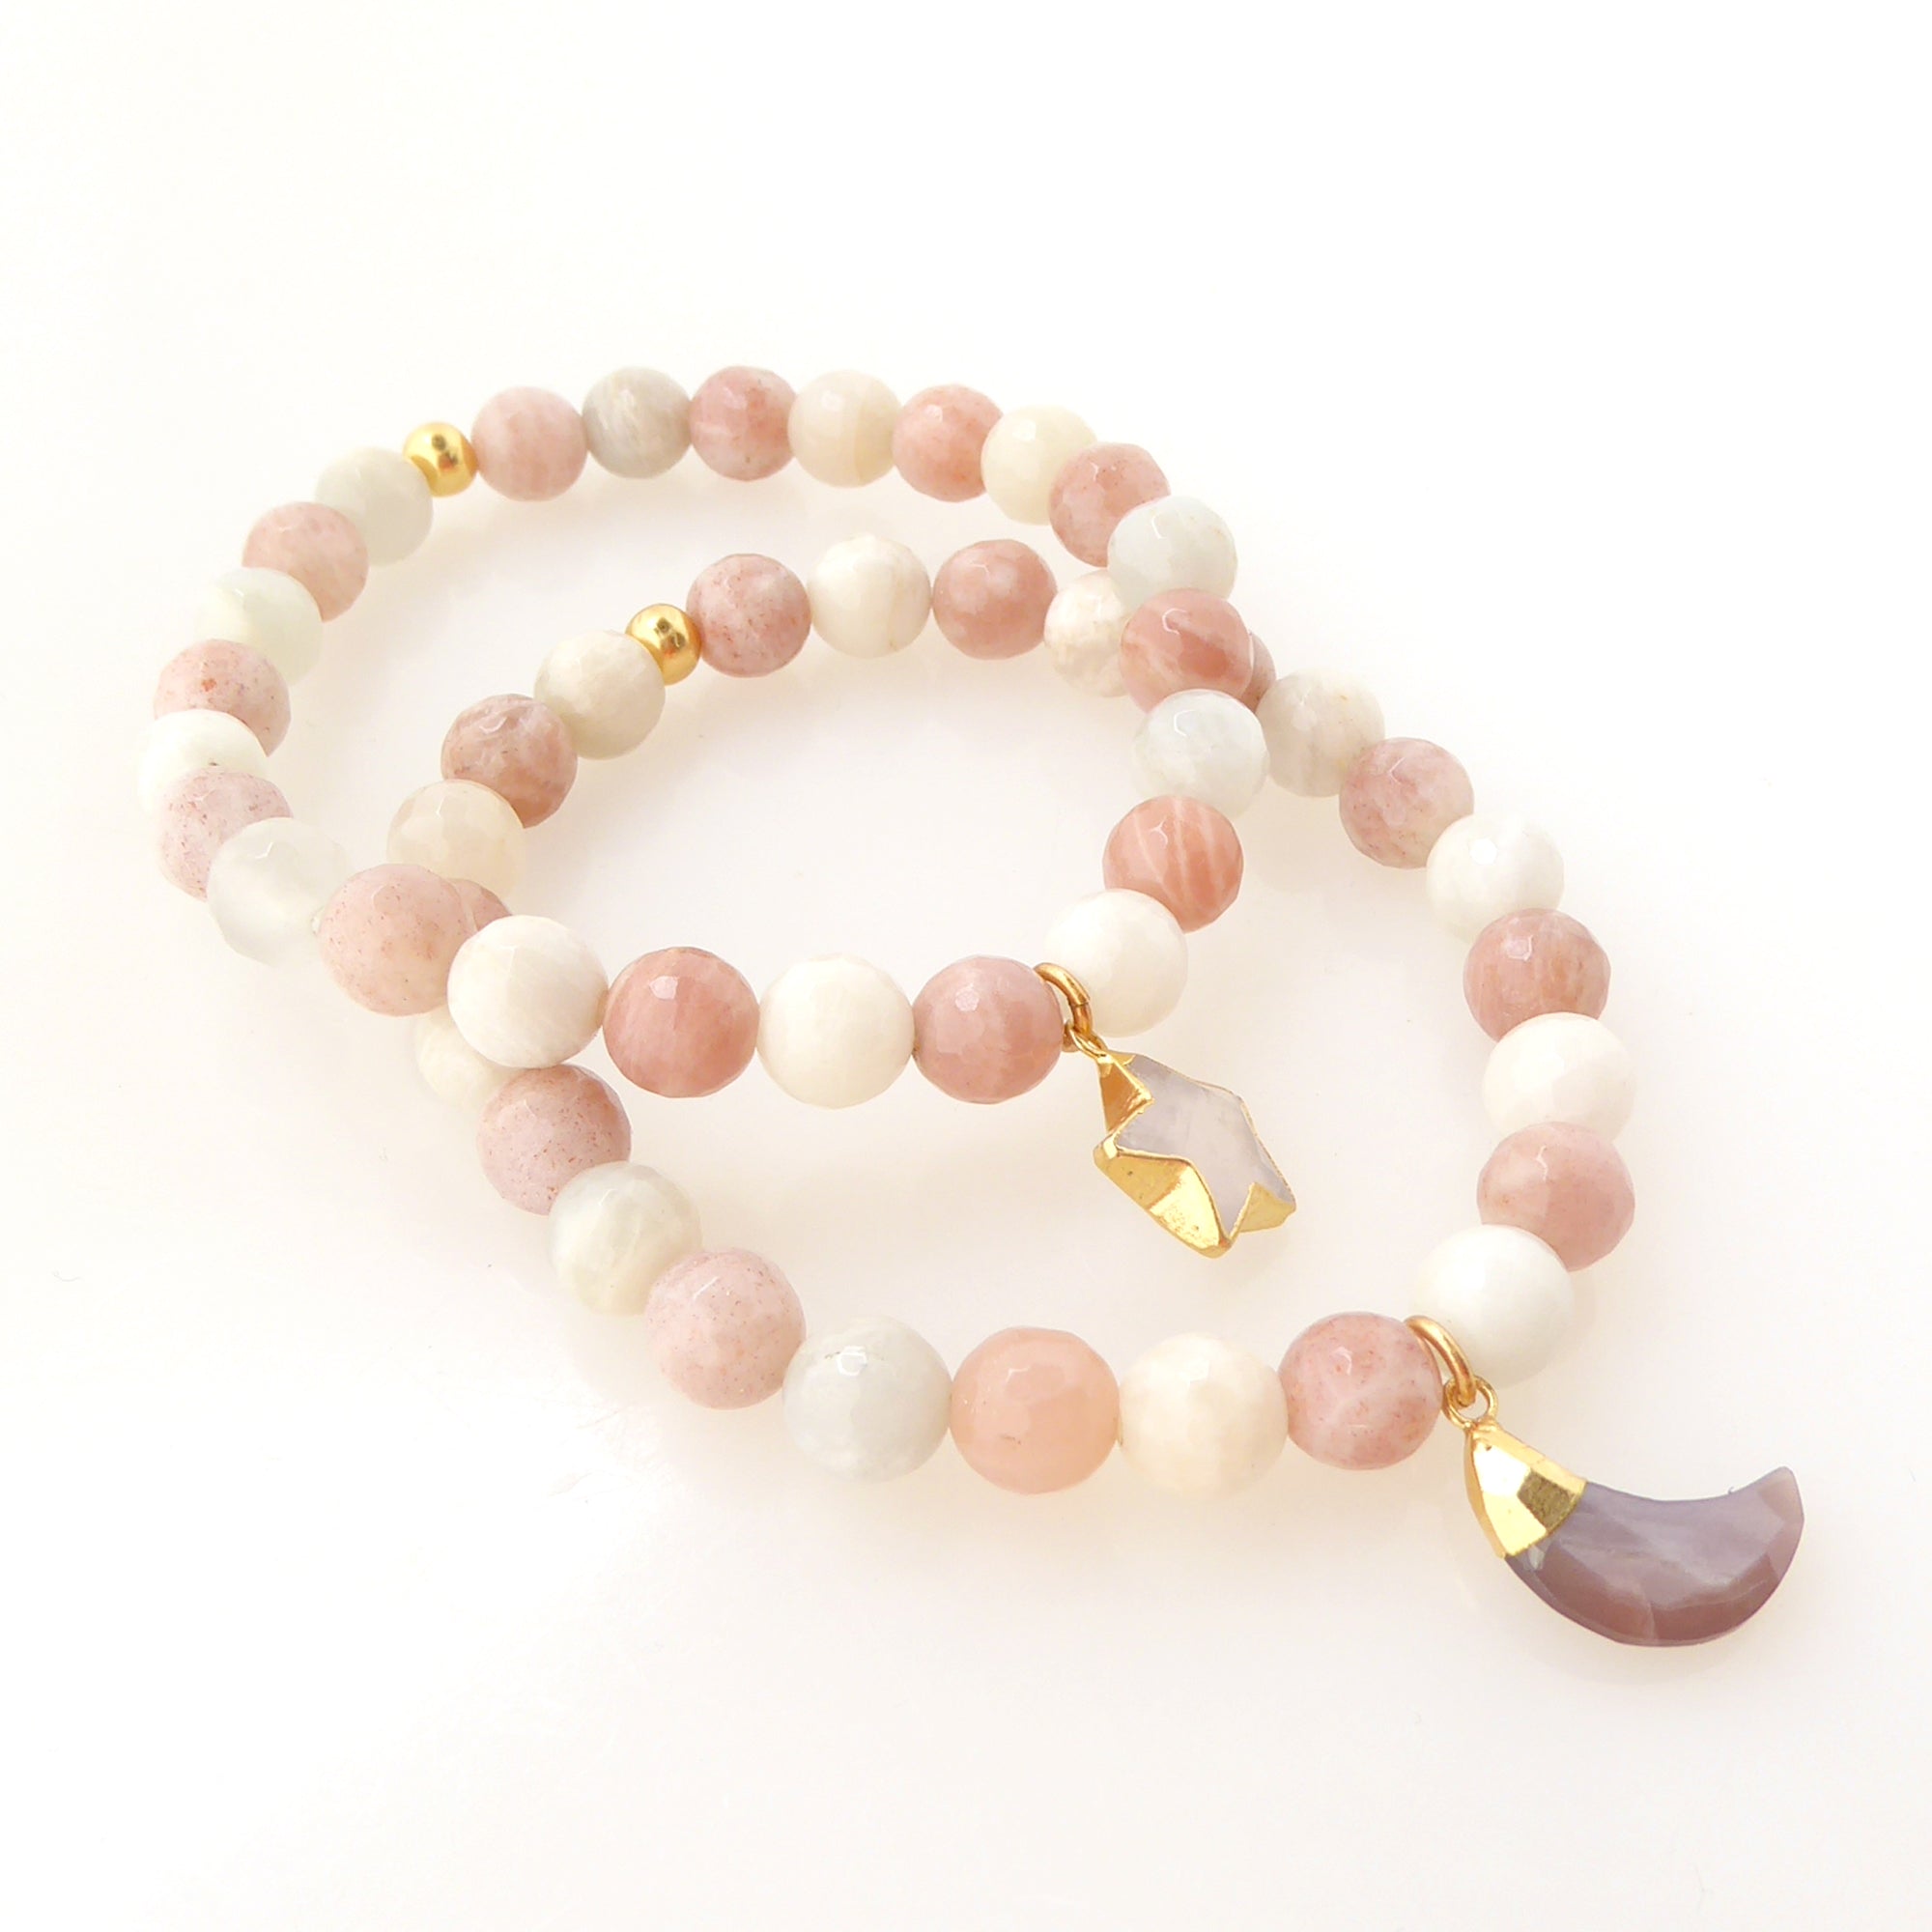 Peach and white moonstone bracelet set by Jenny Dayco 2